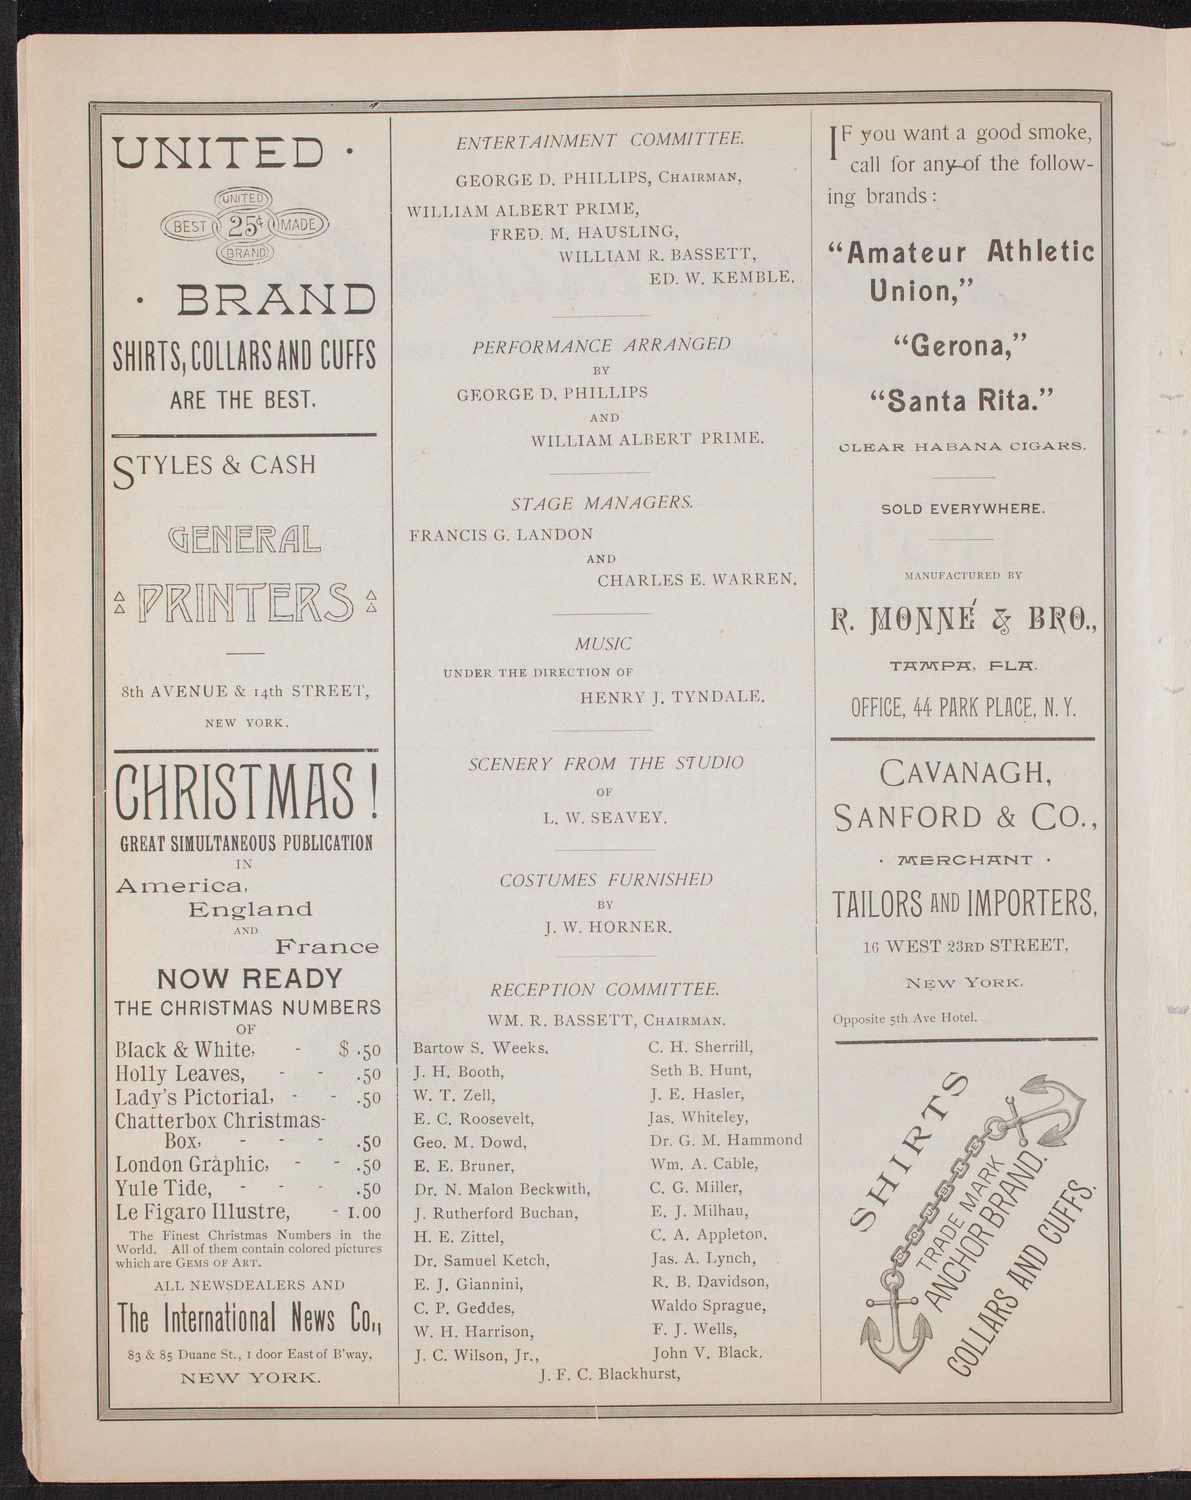 New York Athletic Club Minstrel Show, November 30, 1892, program page 10